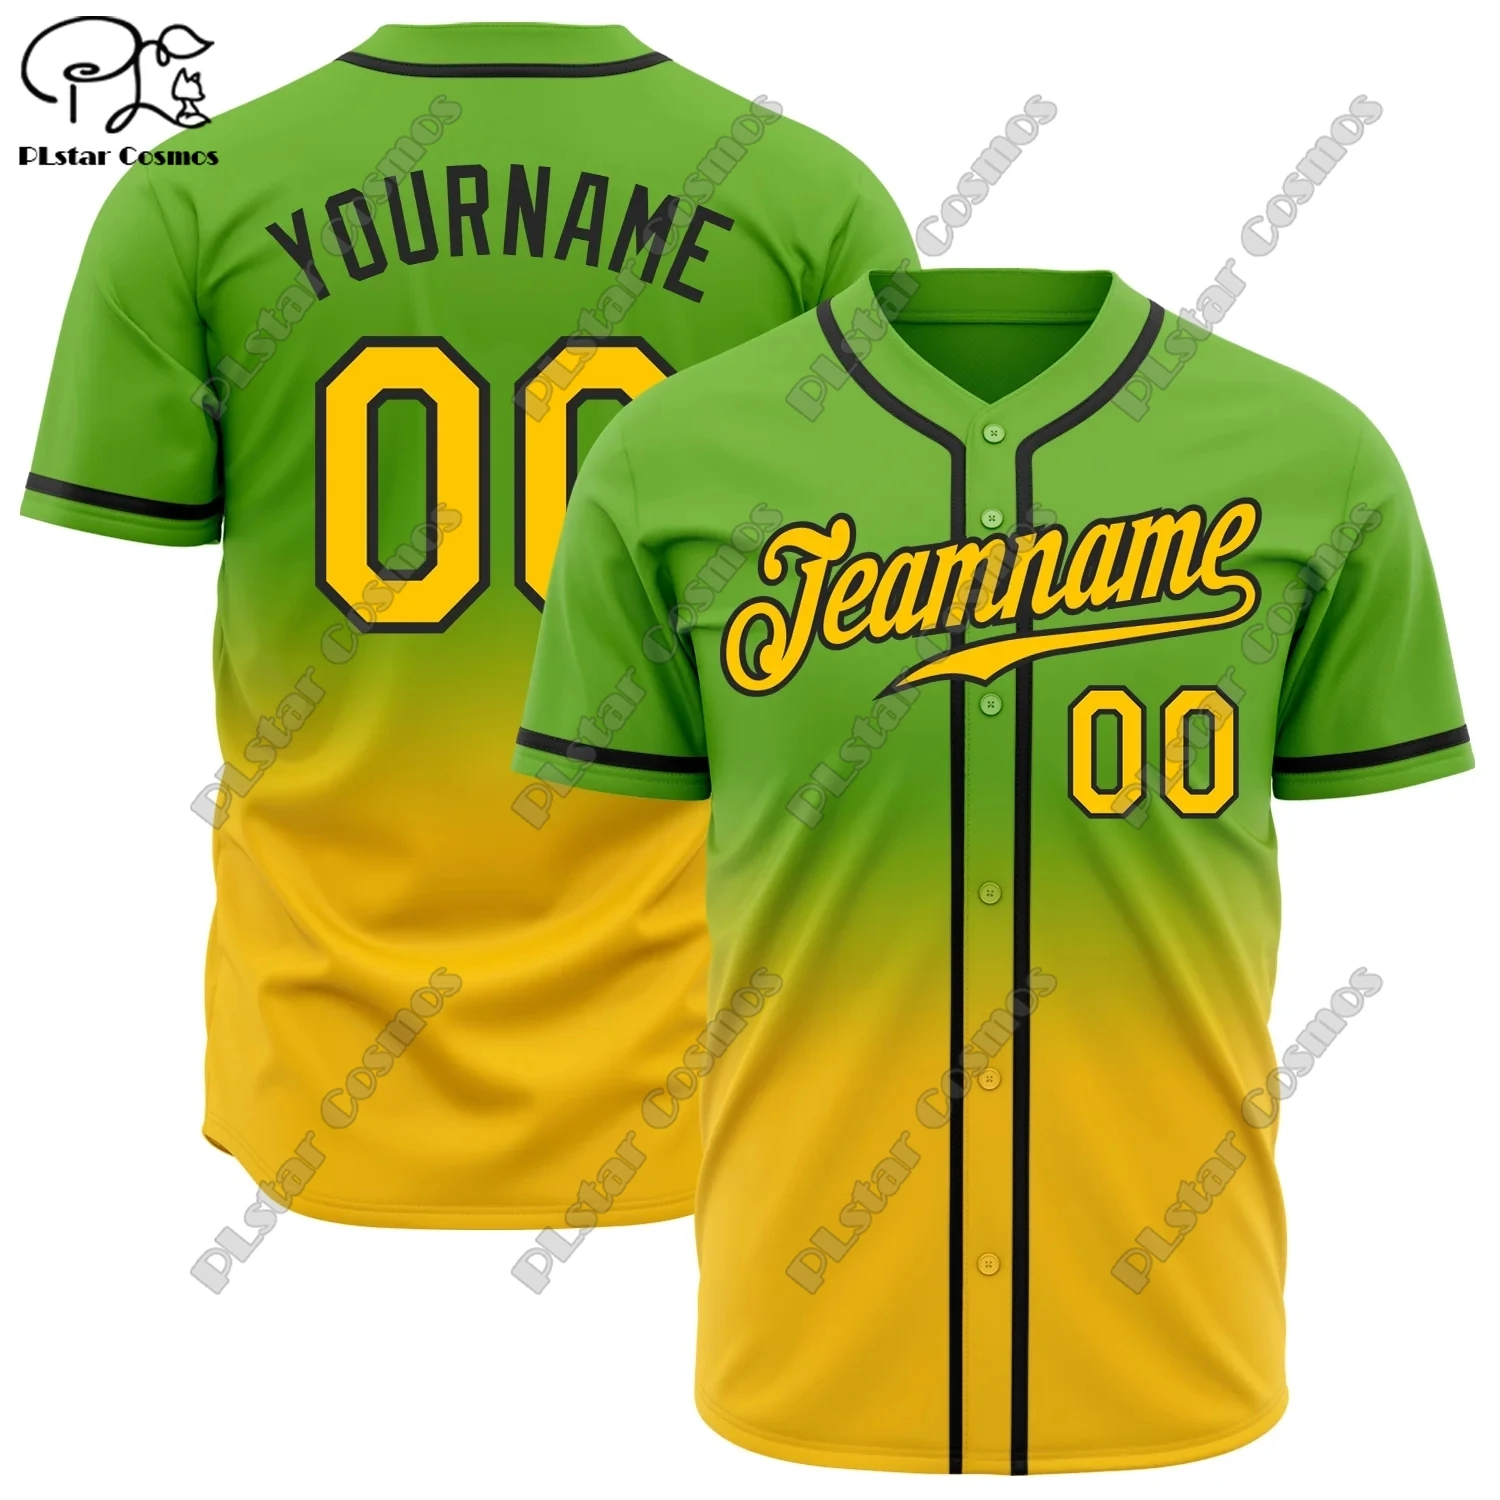 

PLSTAR COSMOS Baseball Shirt Custom Name 3D Printing Gradient Fade Summer Loose Slim Fit Unisex Yellow Green Purple Collection